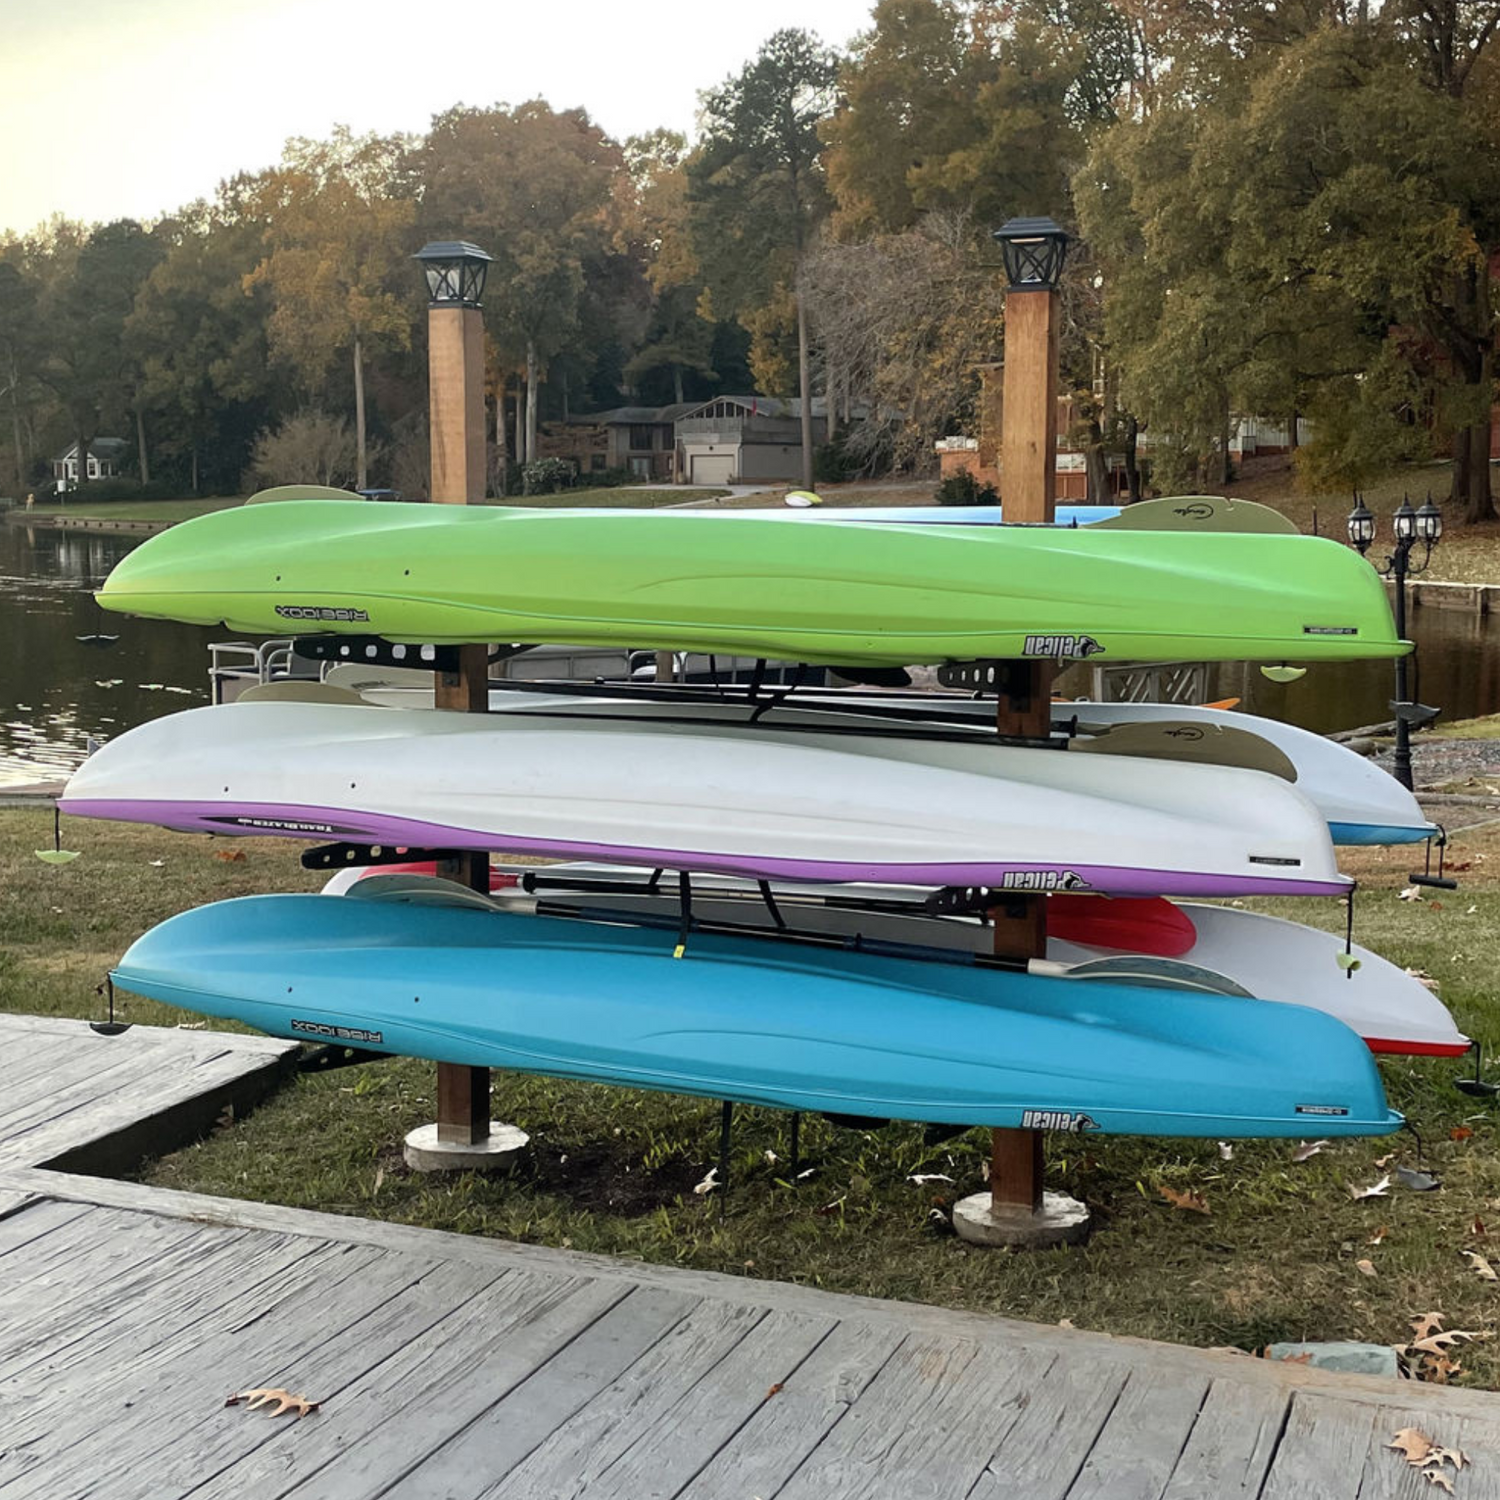 Customer Image of Kayak Racks Mounted By Dock